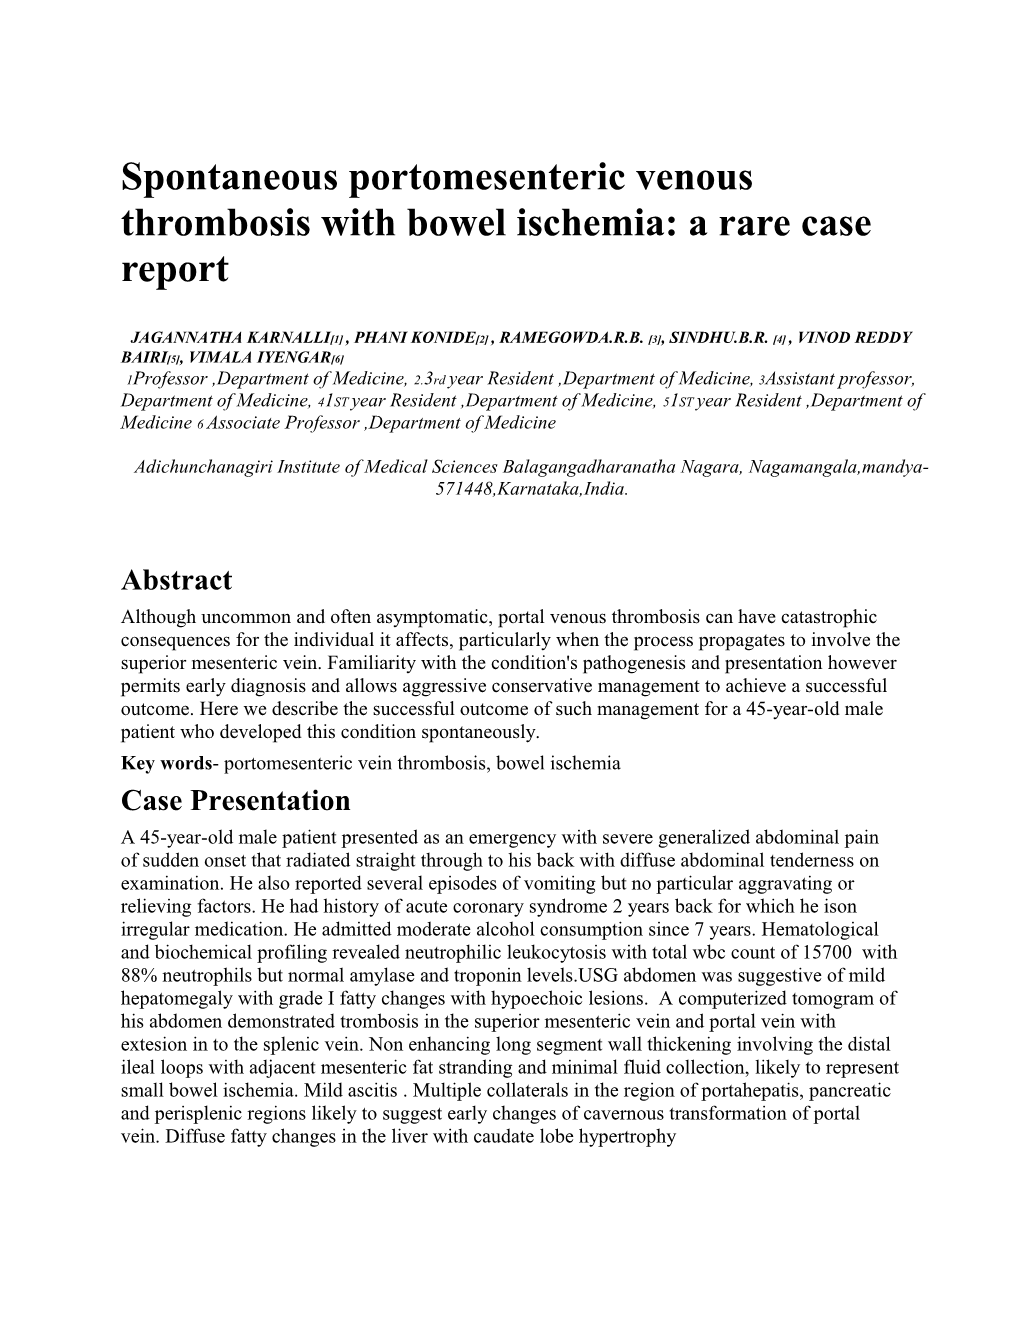 Spontaneous Portomesenteric Venous Thrombosis with Bowel Ischemia: a Rare Case Report